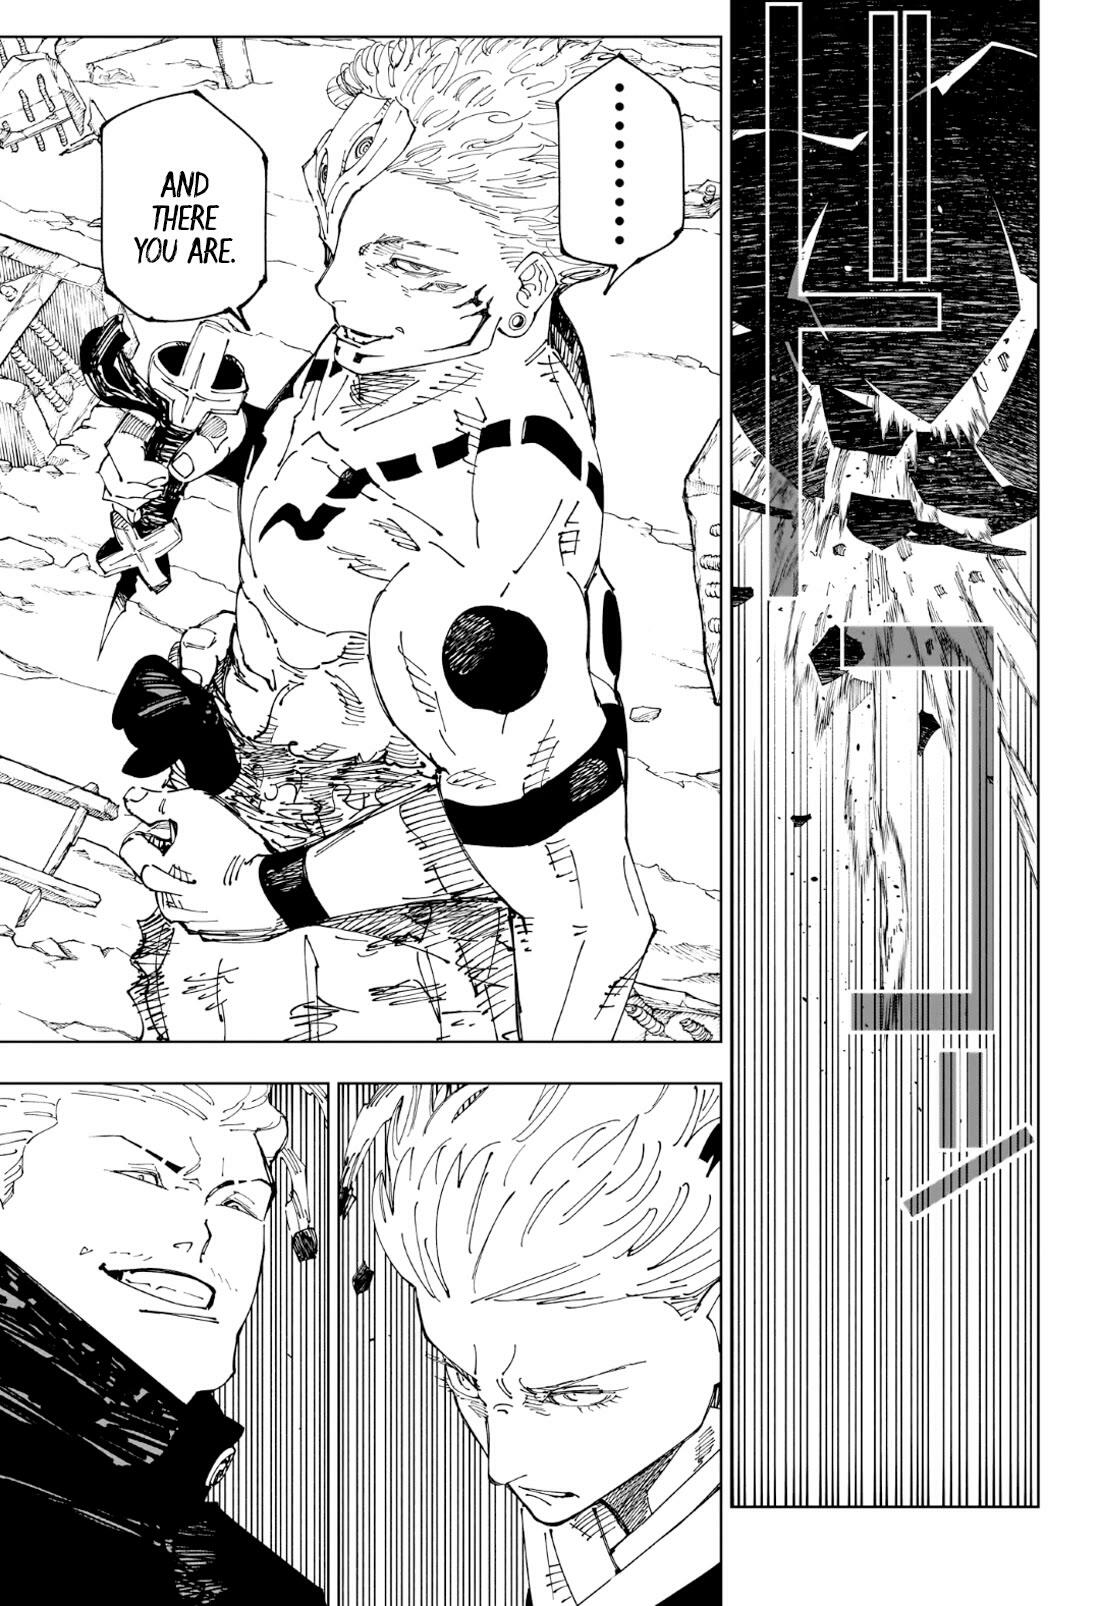 Jujutsu Kaisen Chapter 238: Chapter 238: The Decisive Battle In The Uninhabited, Demon-Infested Shinjuku ⑮ page 17 - Mangakakalot